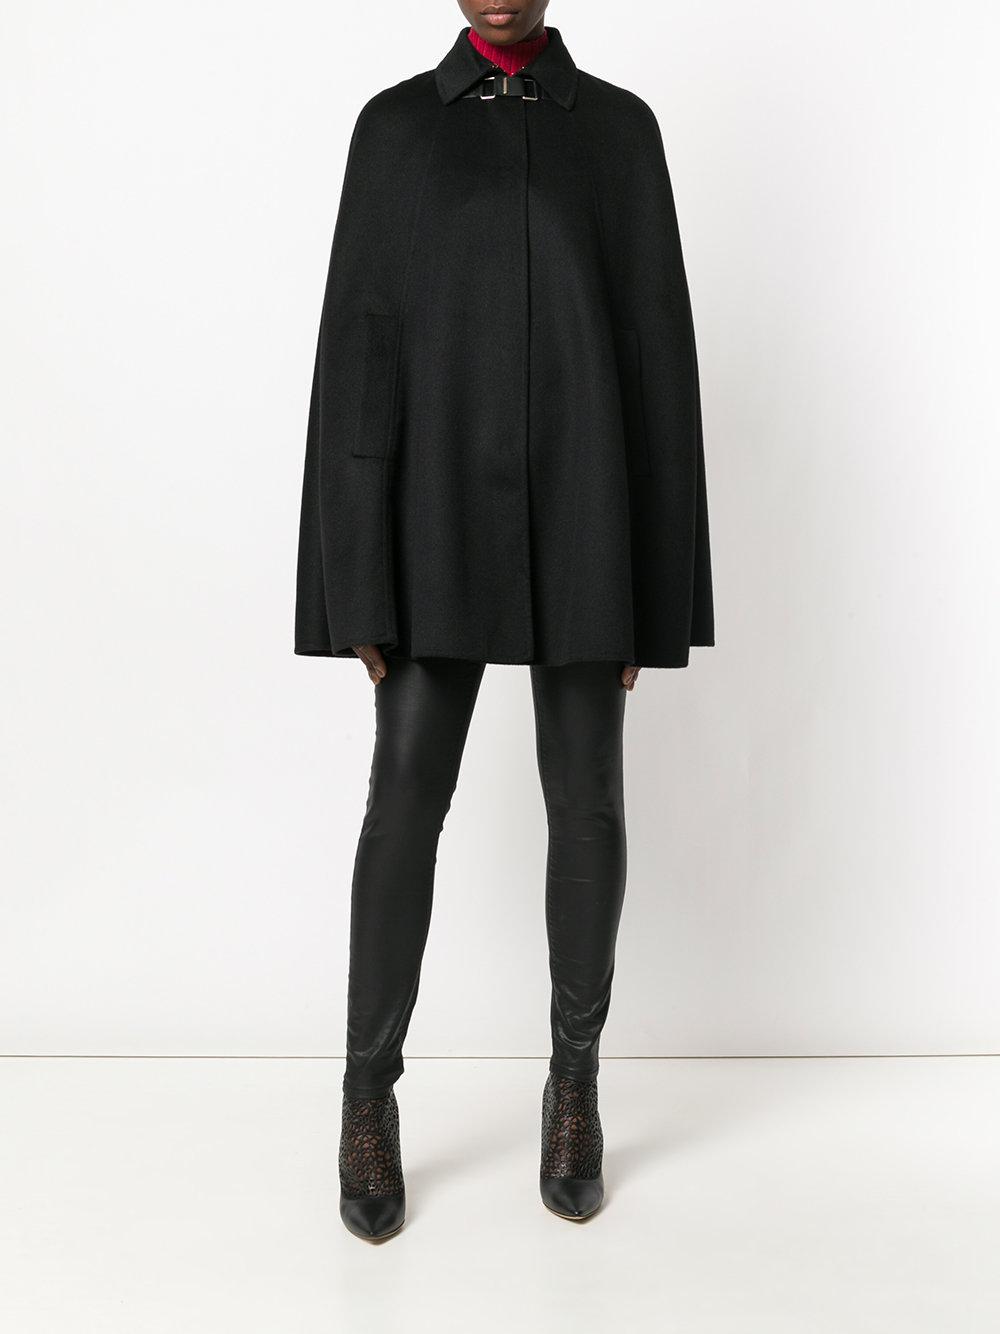 Versace Cashmere Cape Coat in Black - Lyst